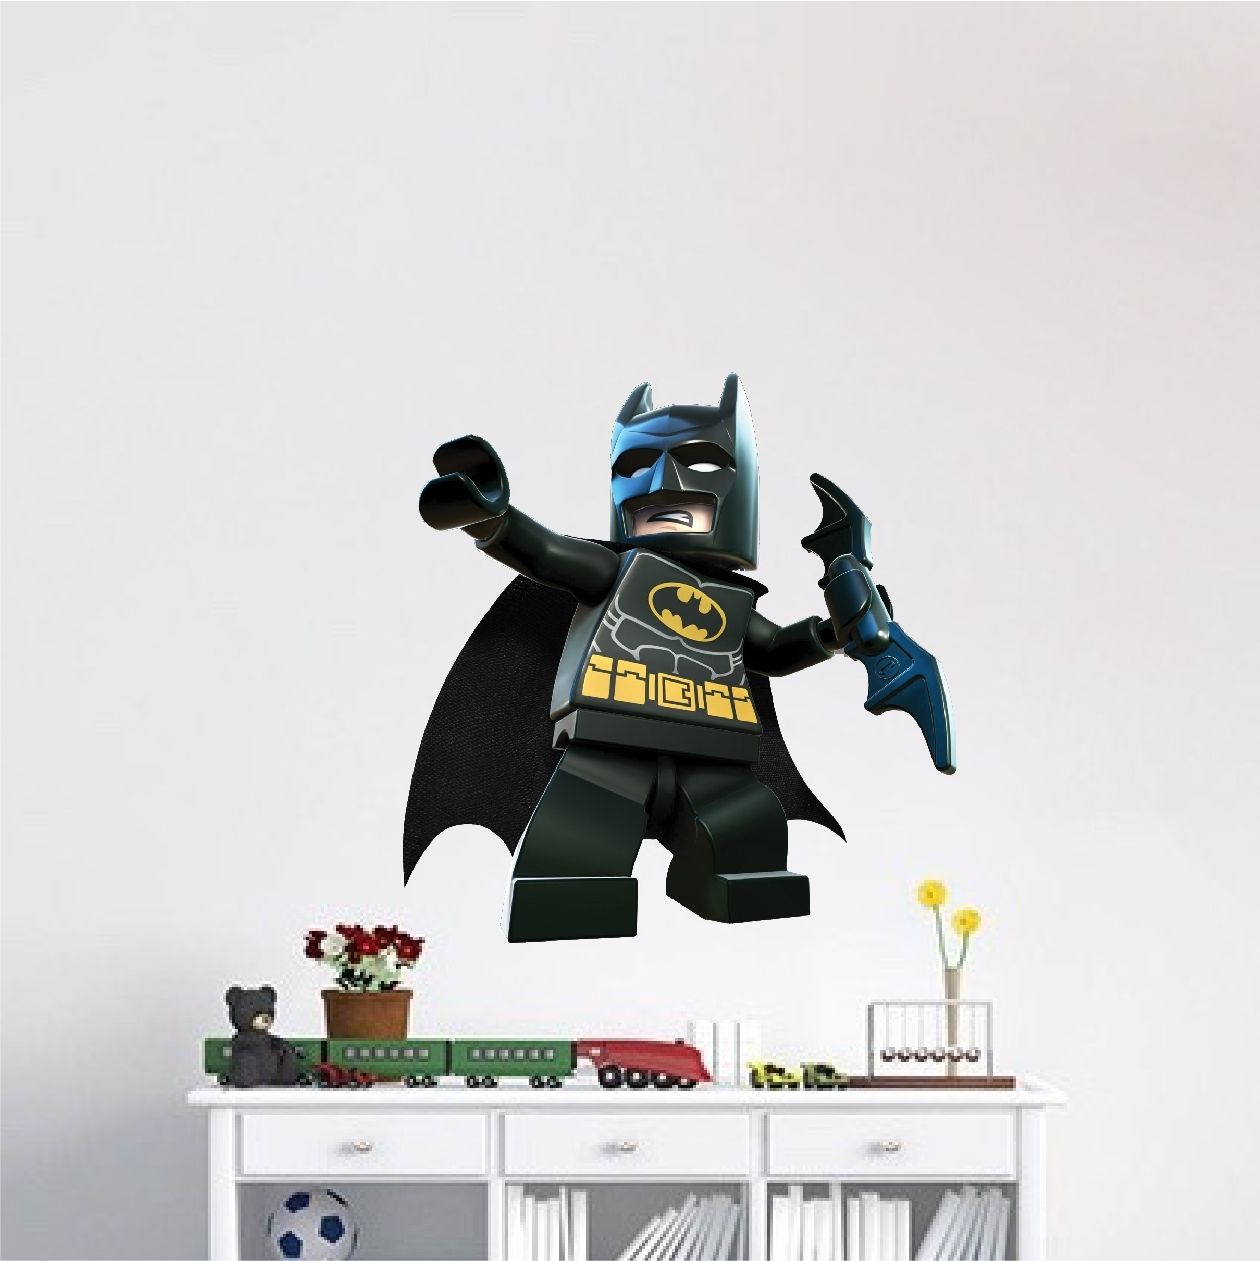 Batman Wall Art In Popular Lego Batman Wall Decal – Superhero Wall Design – The Dark Knight (View 14 of 15)